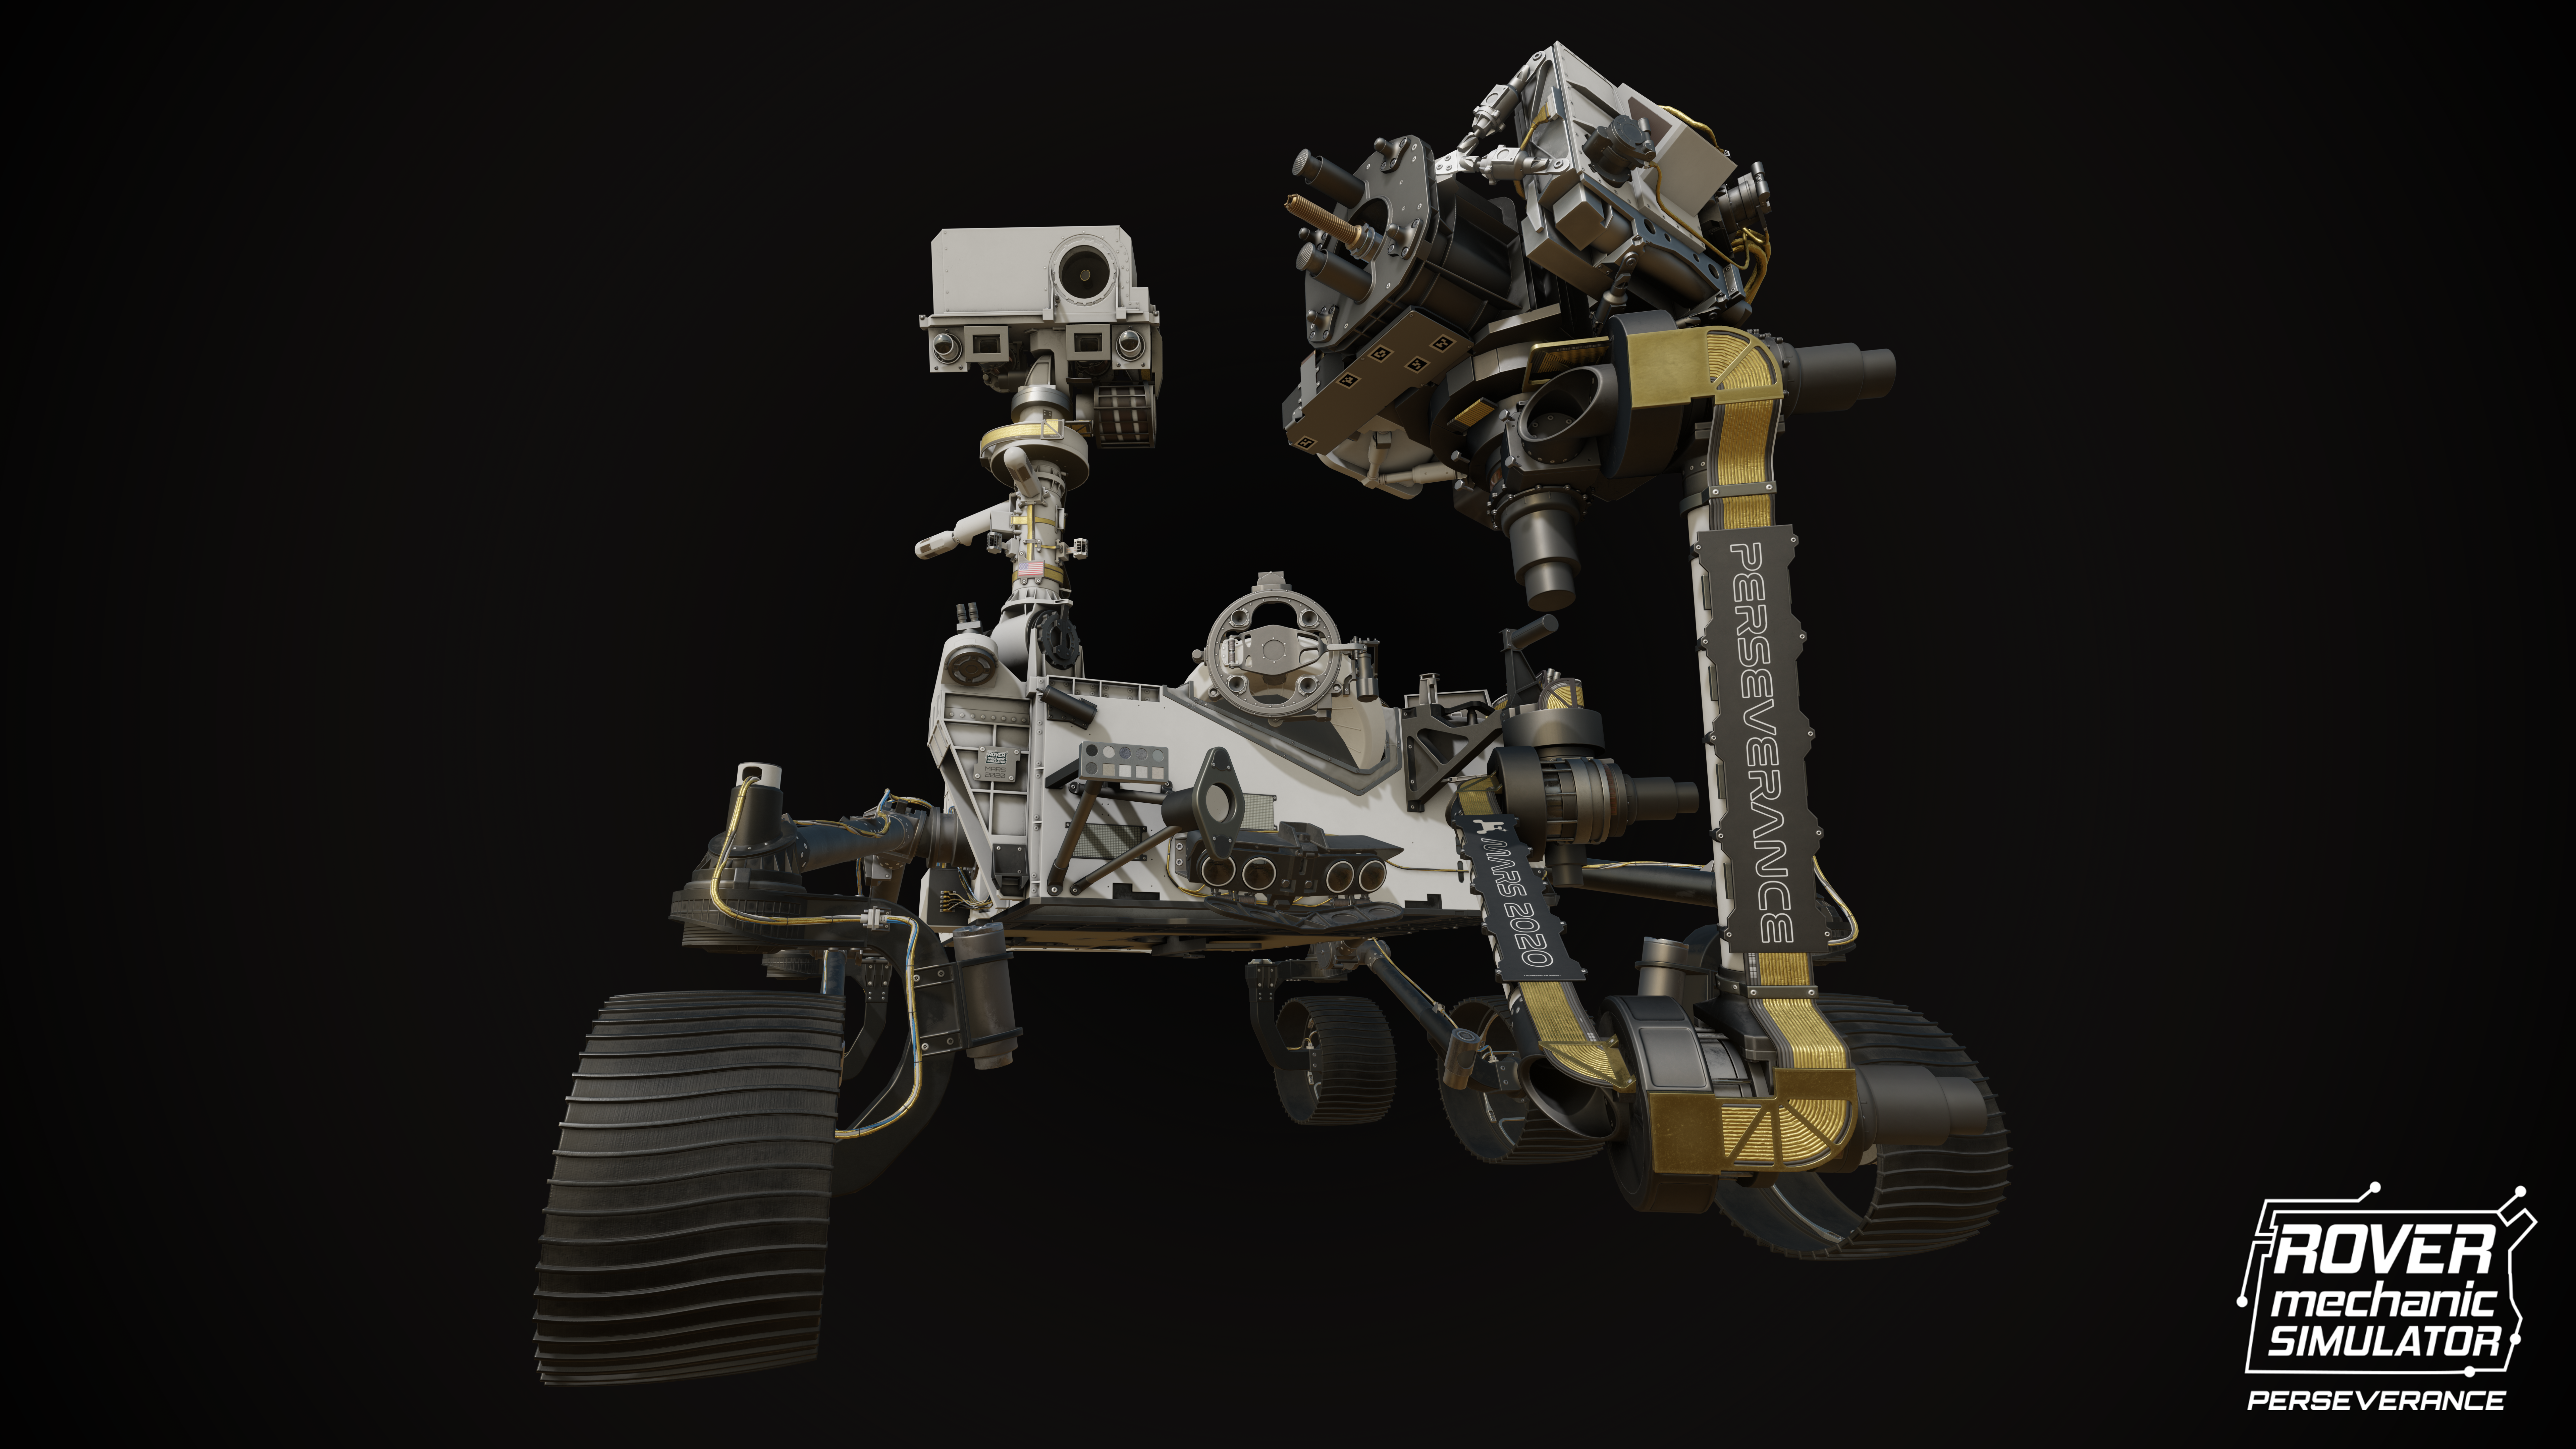 General 7680x4320 Perseverance (Mars Robot) mars rover NASA Curiosity video game art simple background digital art